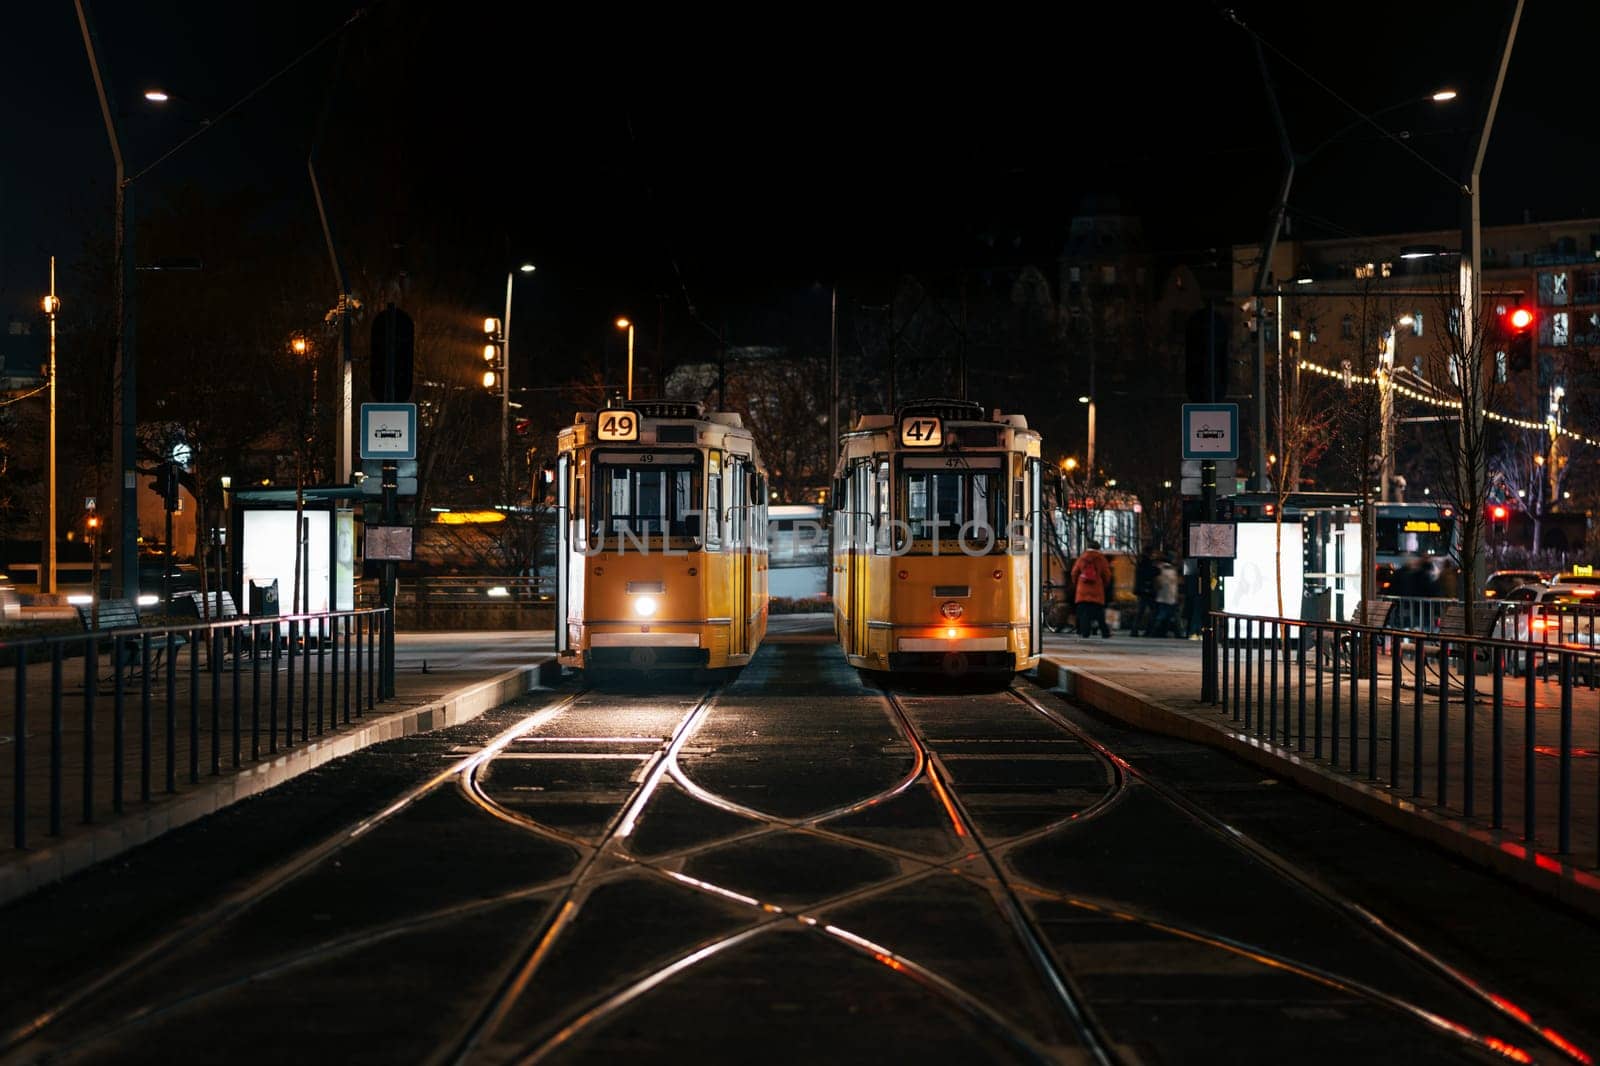 Tramways stand on tram rails in illuminated evening city by apavlin